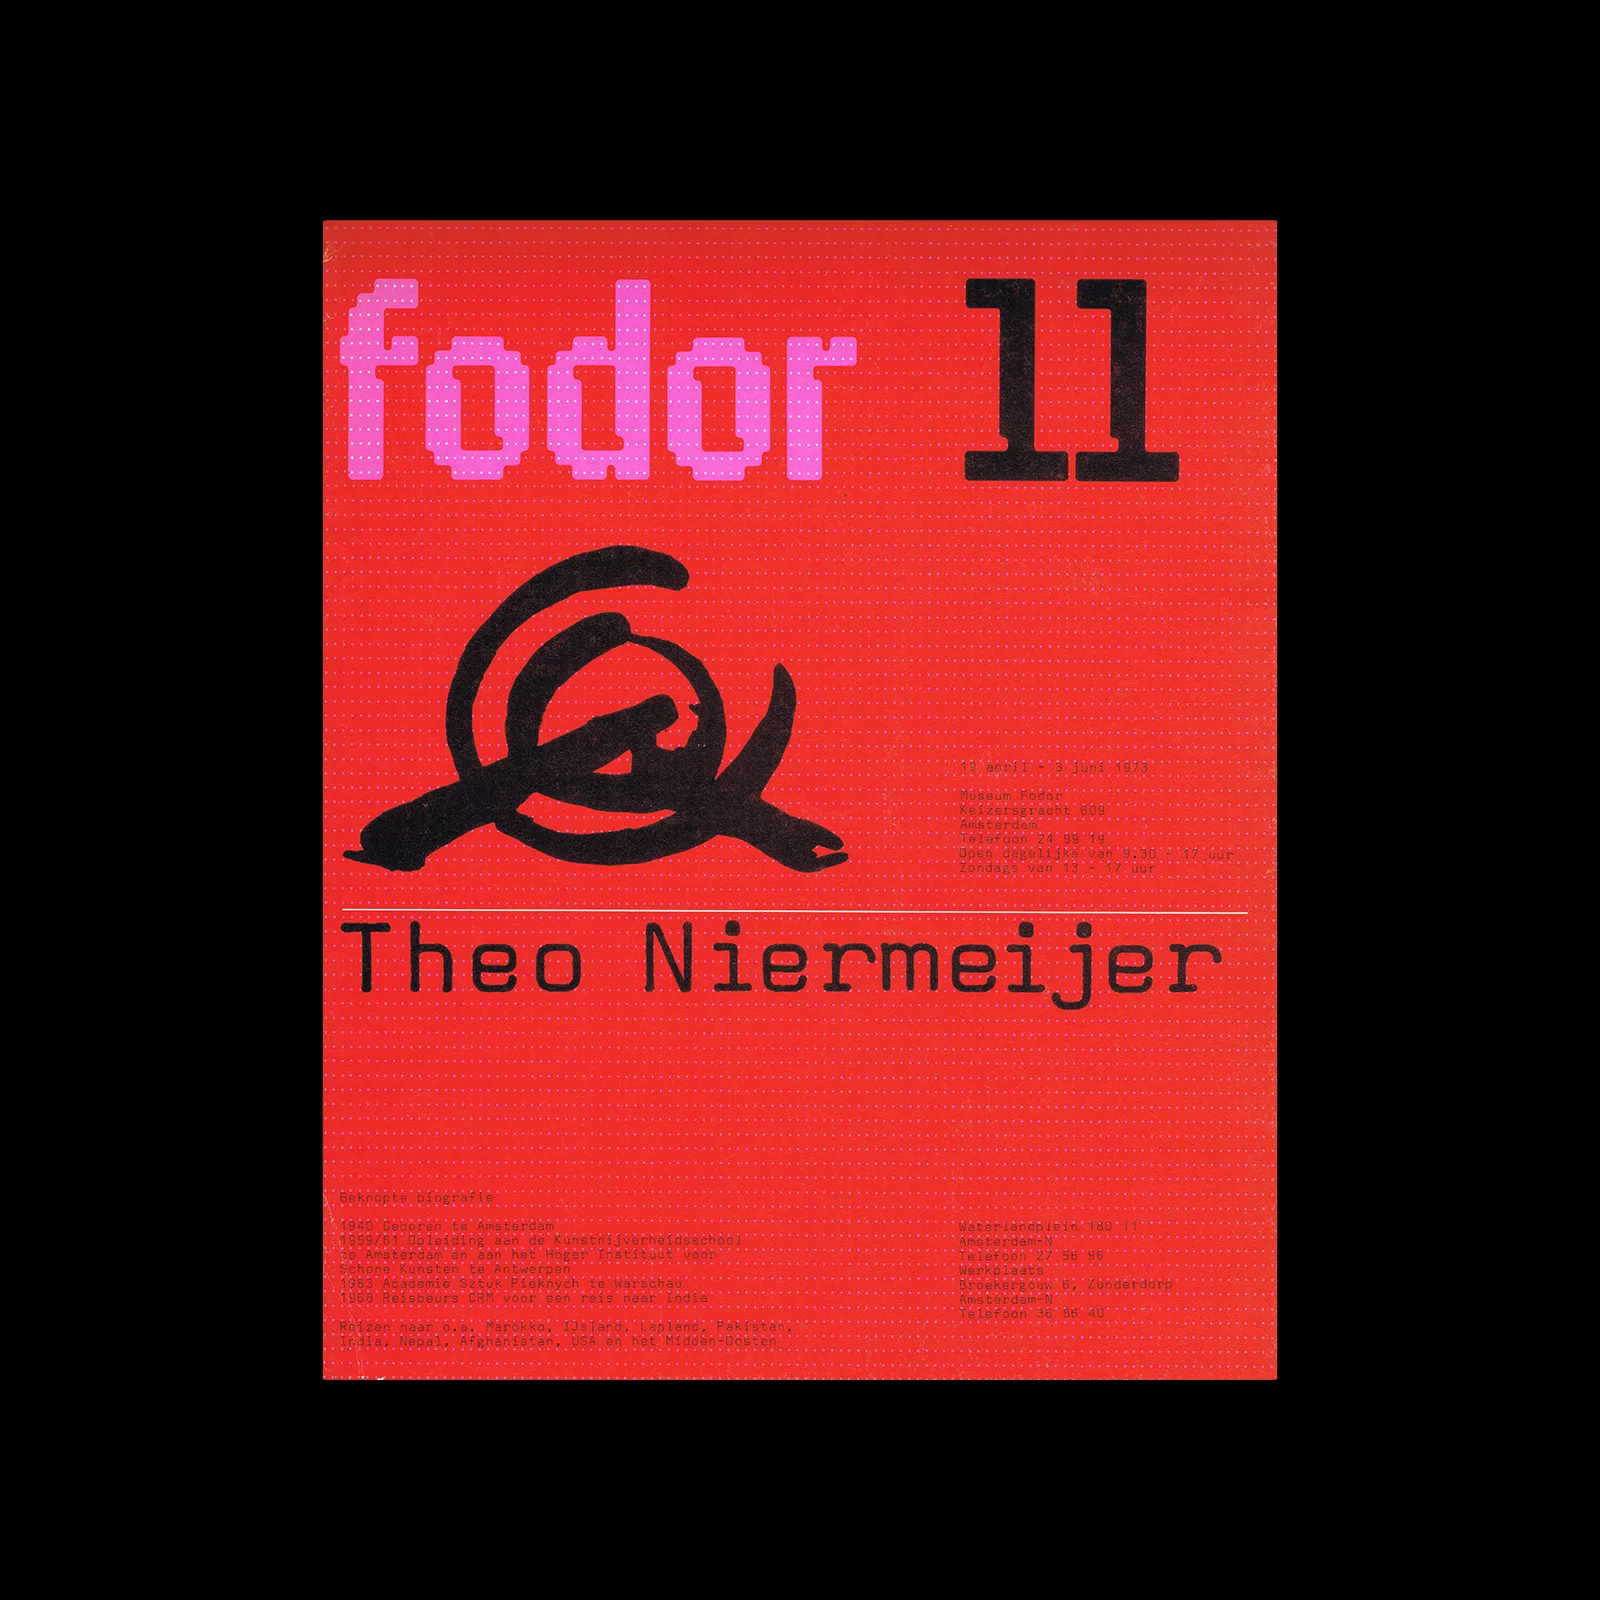 Fodor 11, 1973 - Theo Niermeijer. Designed by Wim Crouwel